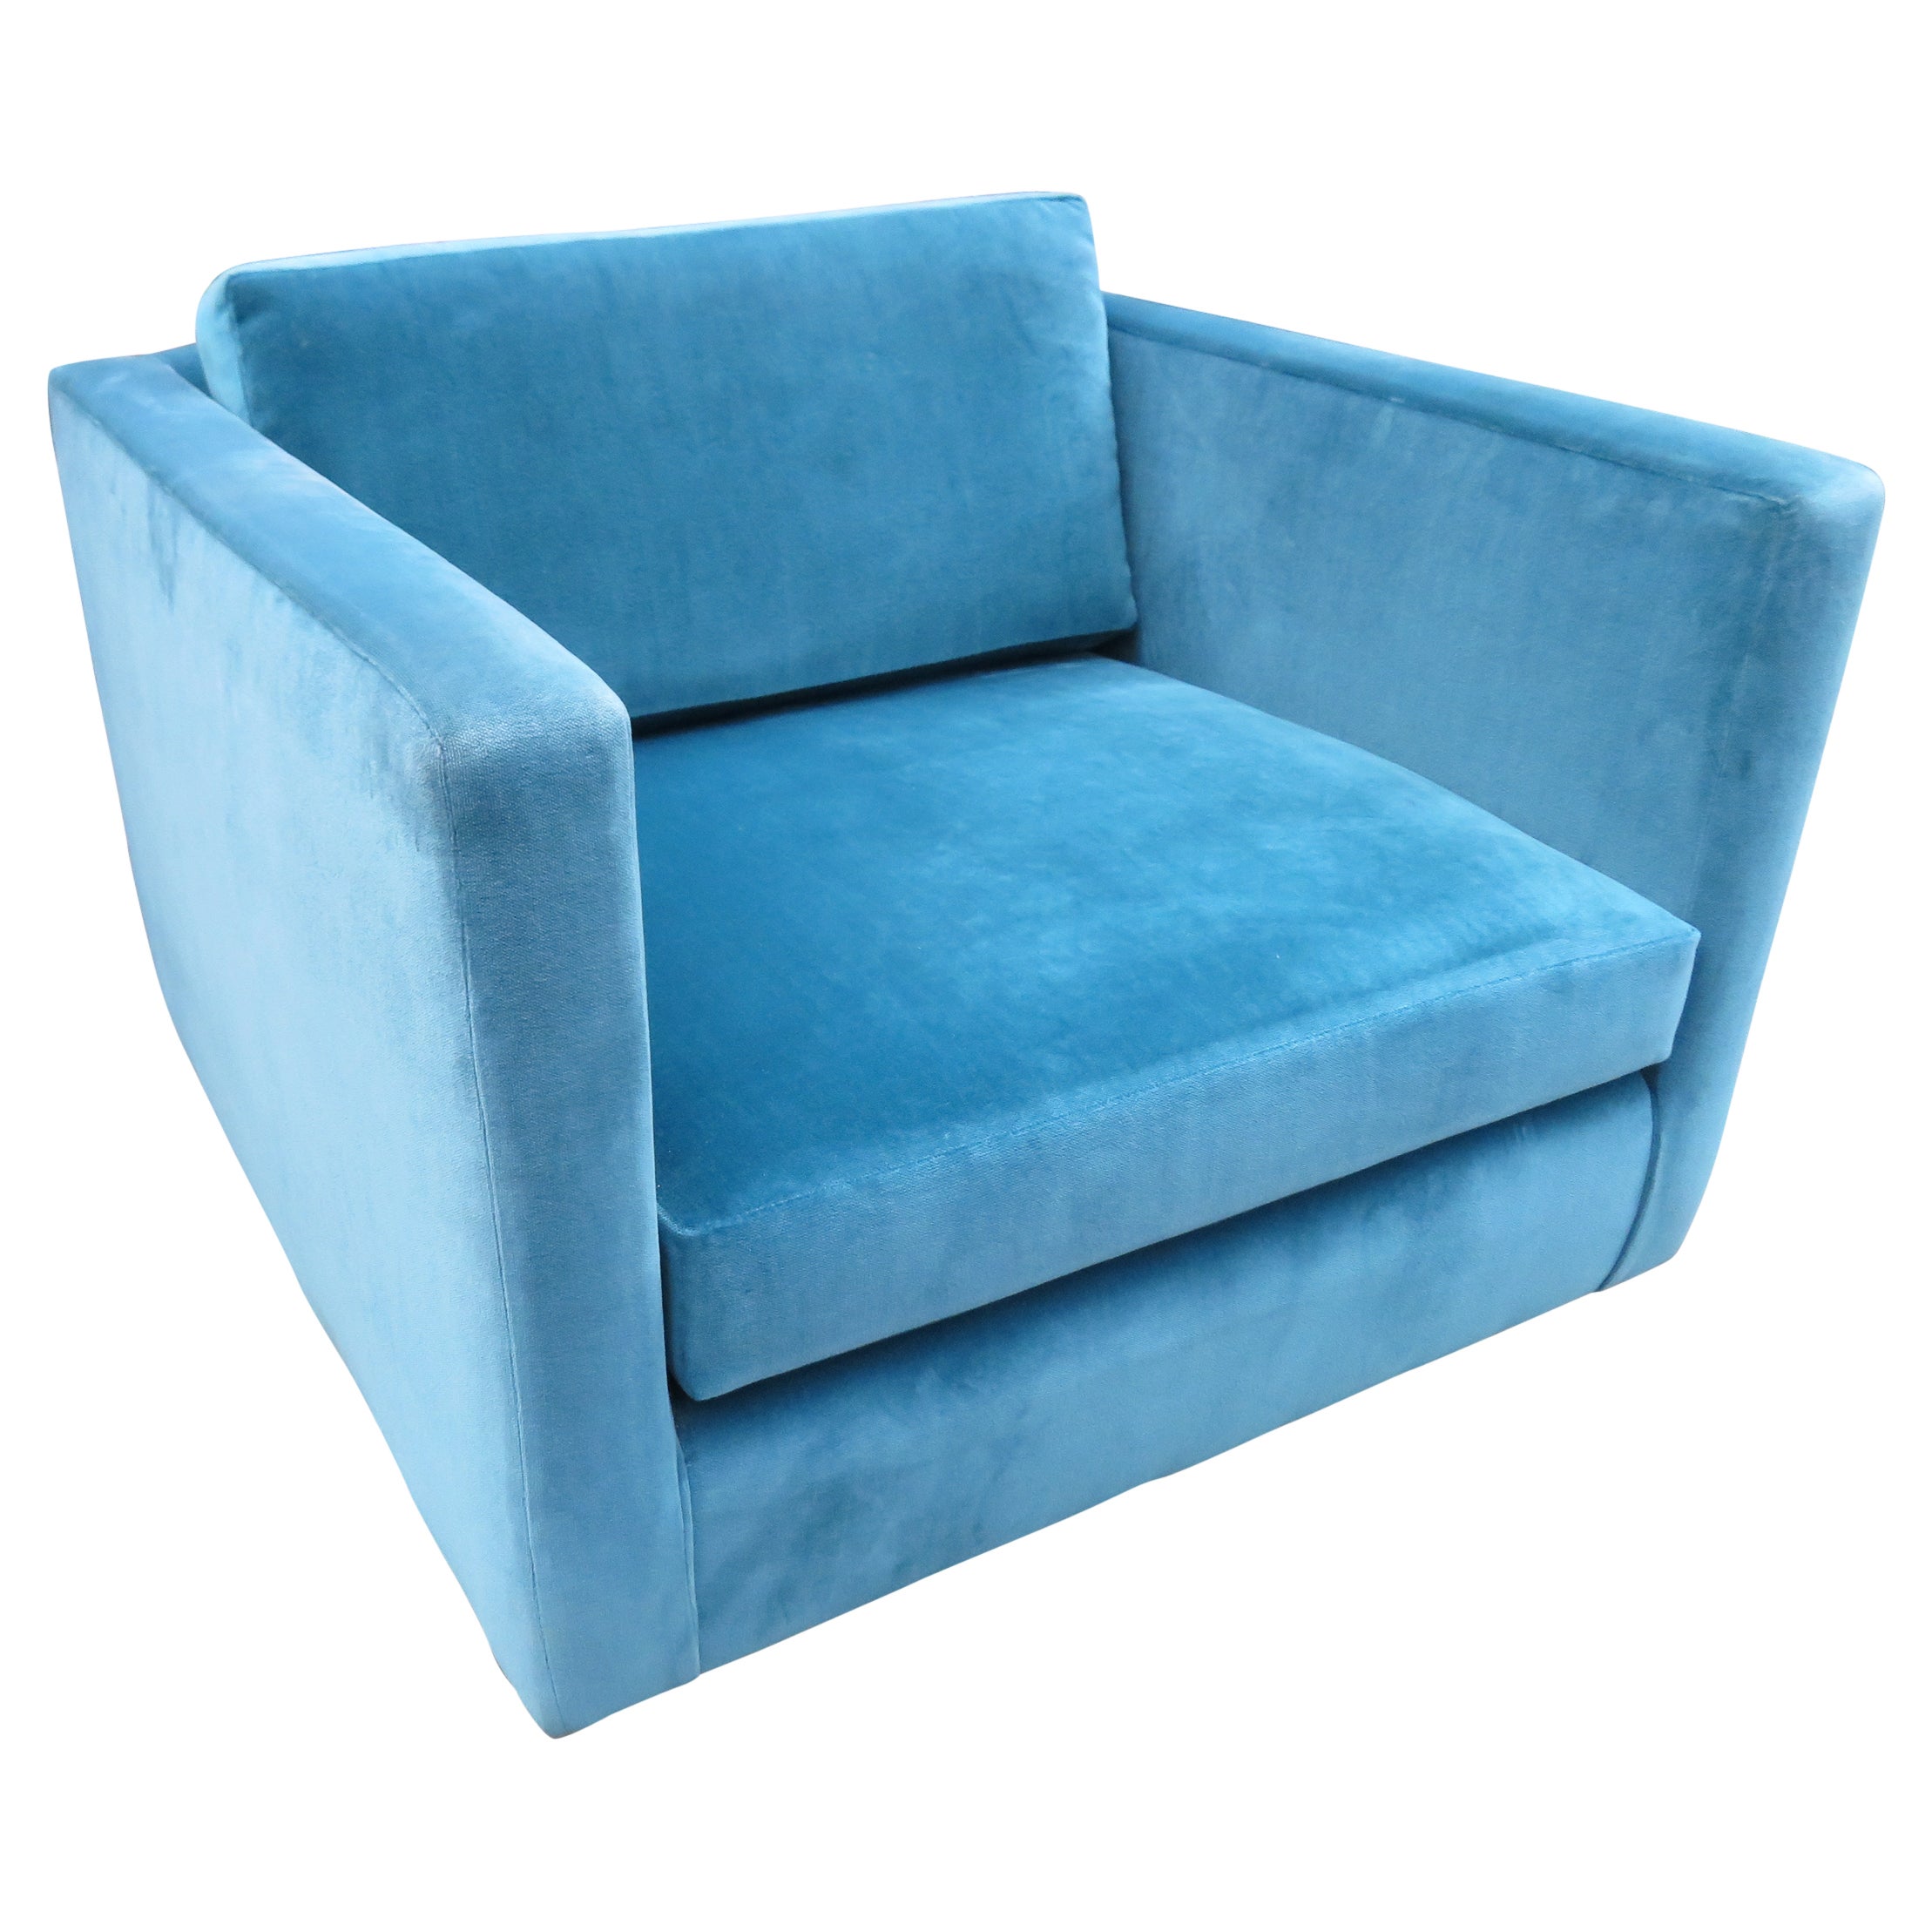 Handsome Milo Baughman Directional Cube Lounge Chair Mid-Century Modern